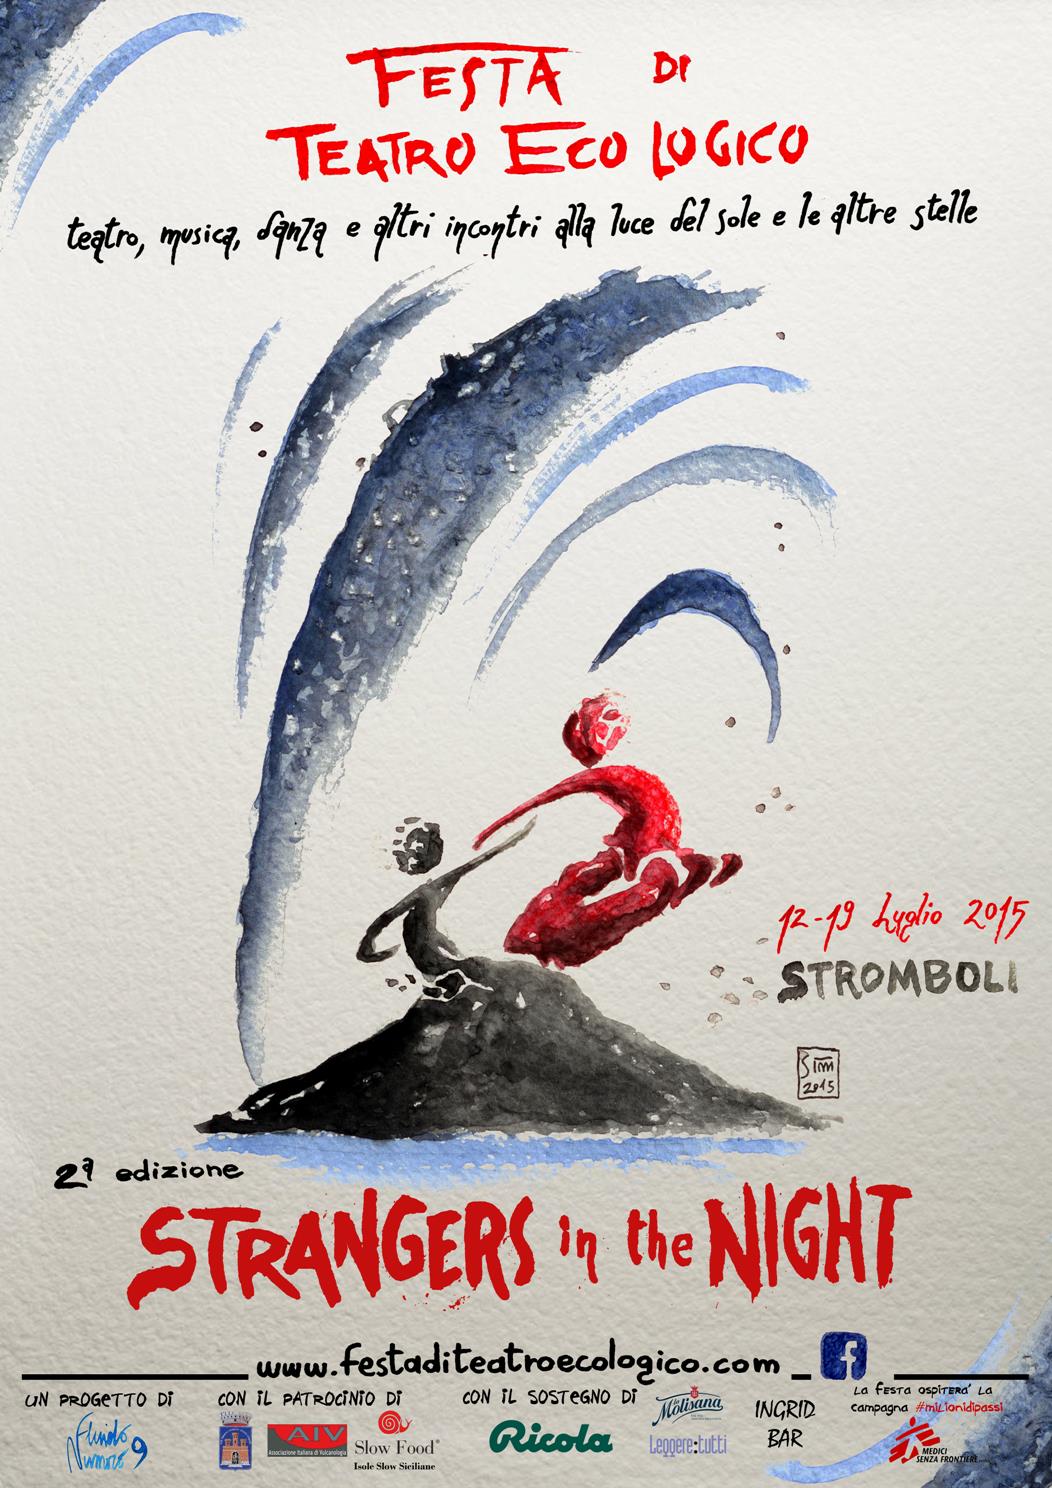 Stromboli:"Strangers in the night", la festa del teatro EcoLogico